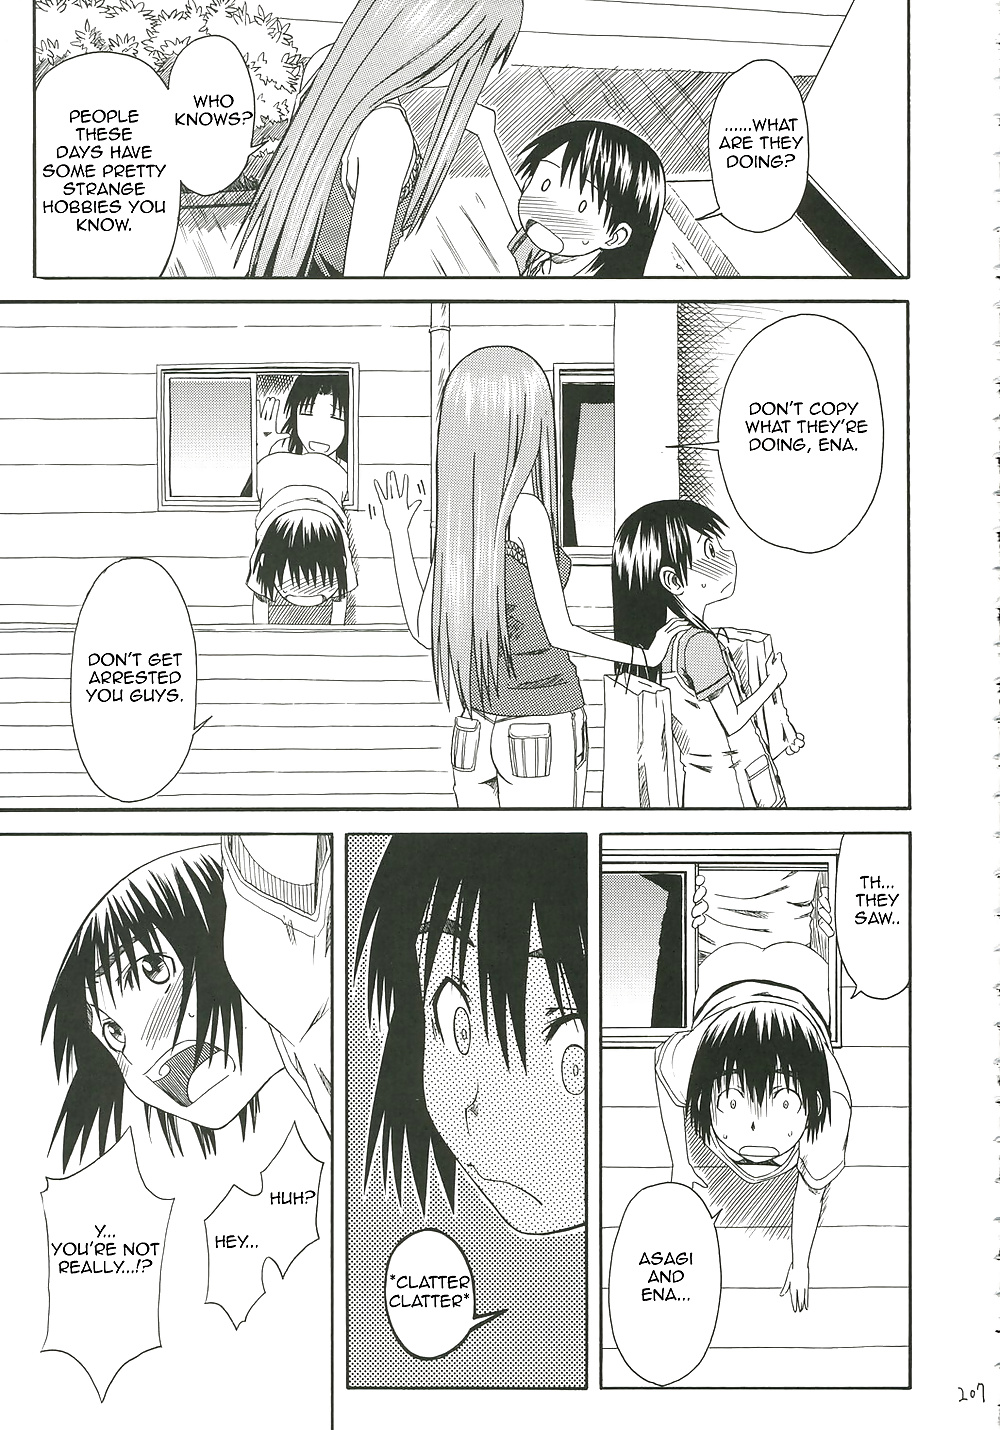 (Manga) Window girl #28805768